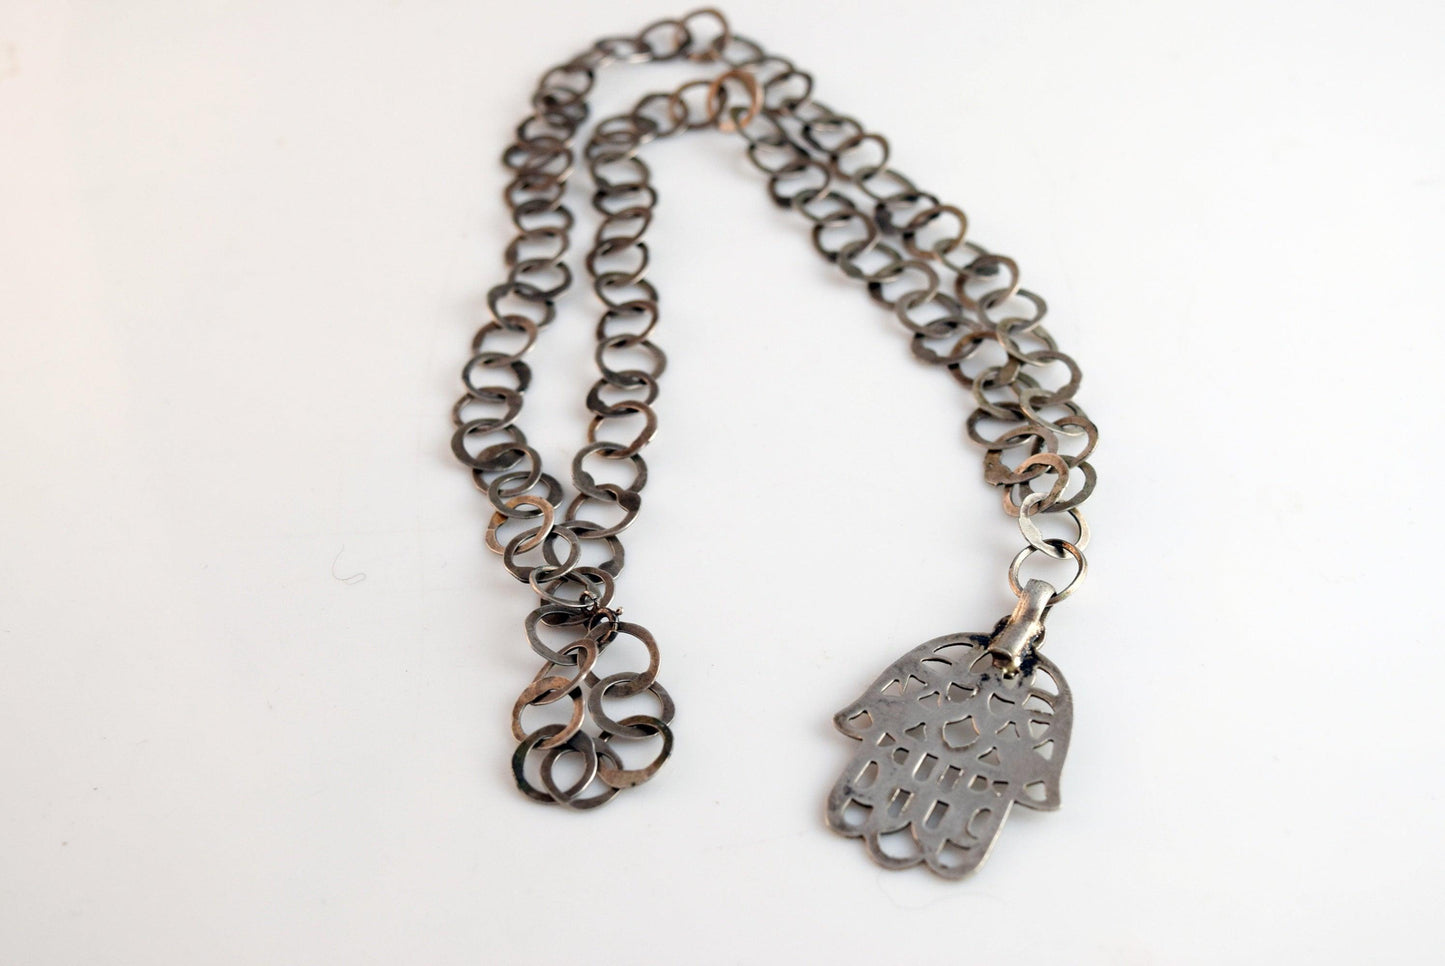 Khamsa necklace with rihanna chain